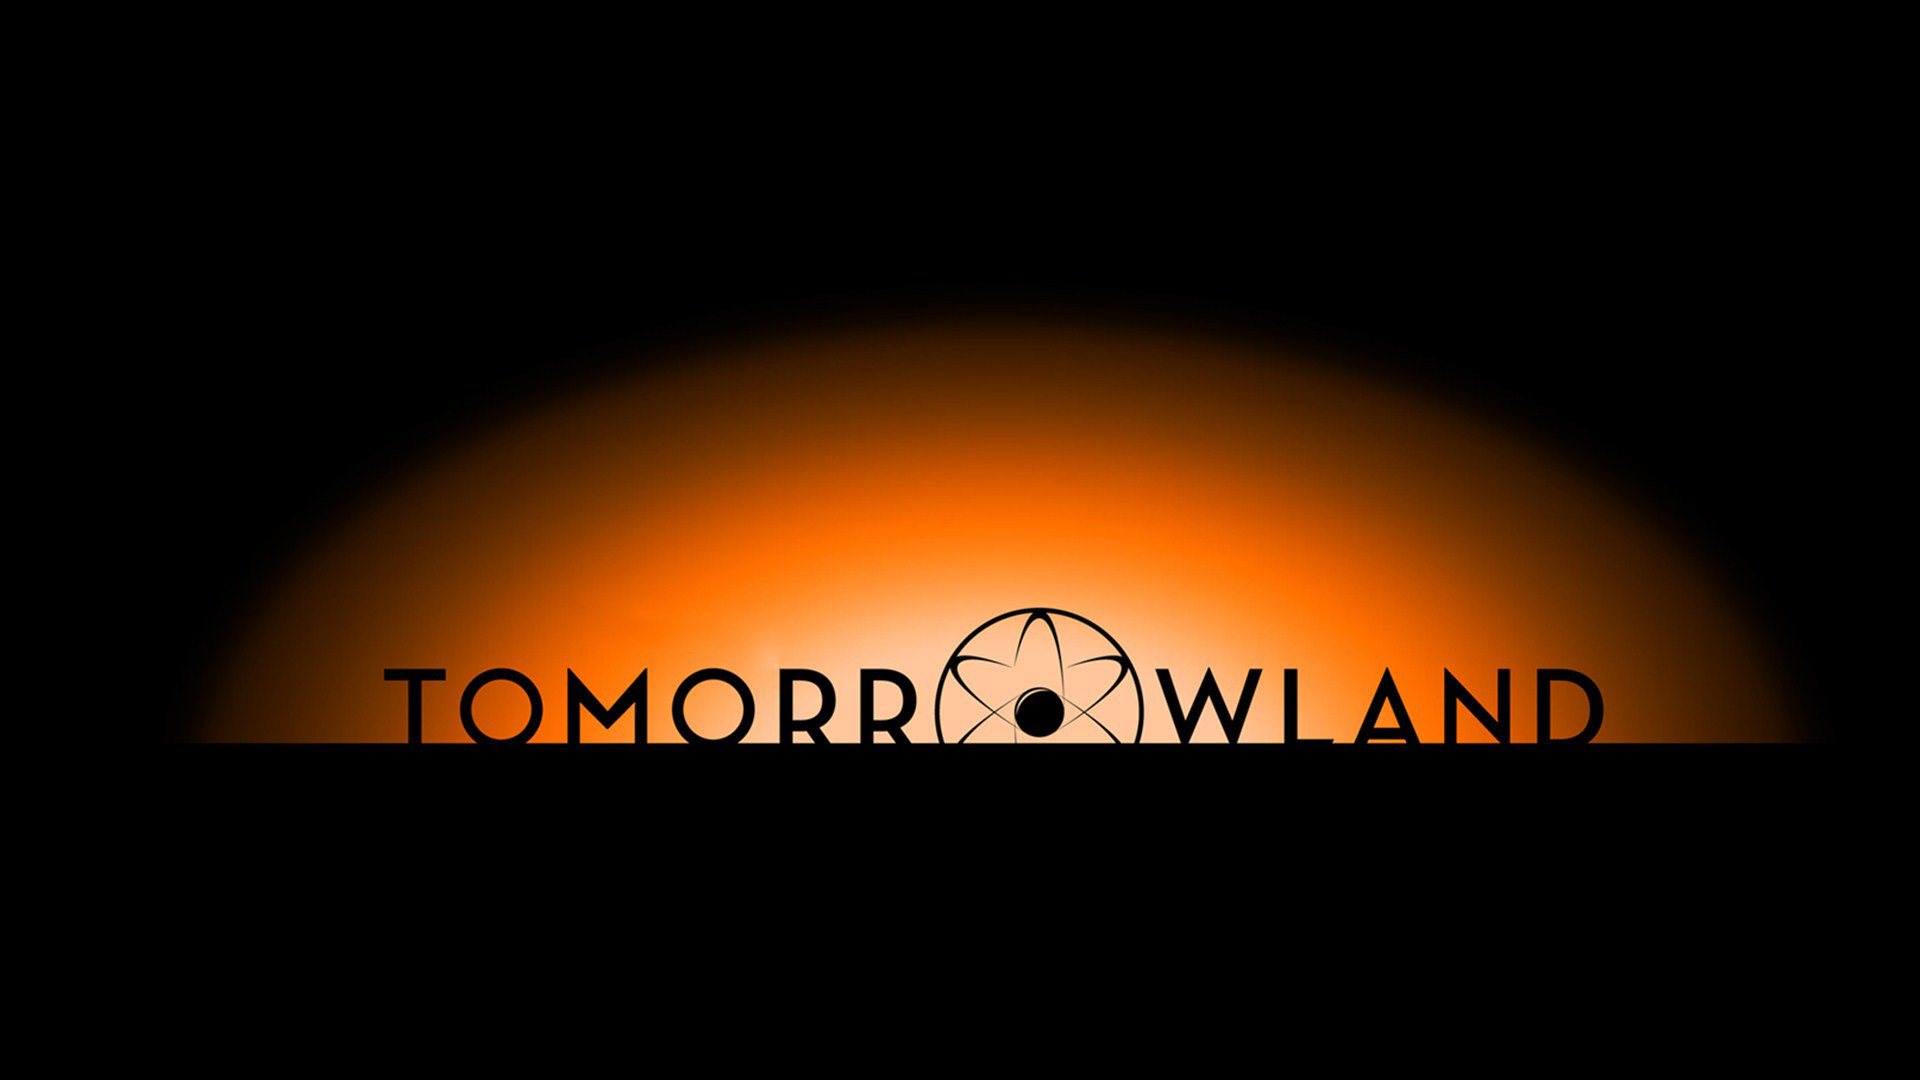 Tomorrowland 1080p Wallpaper tomorrowland